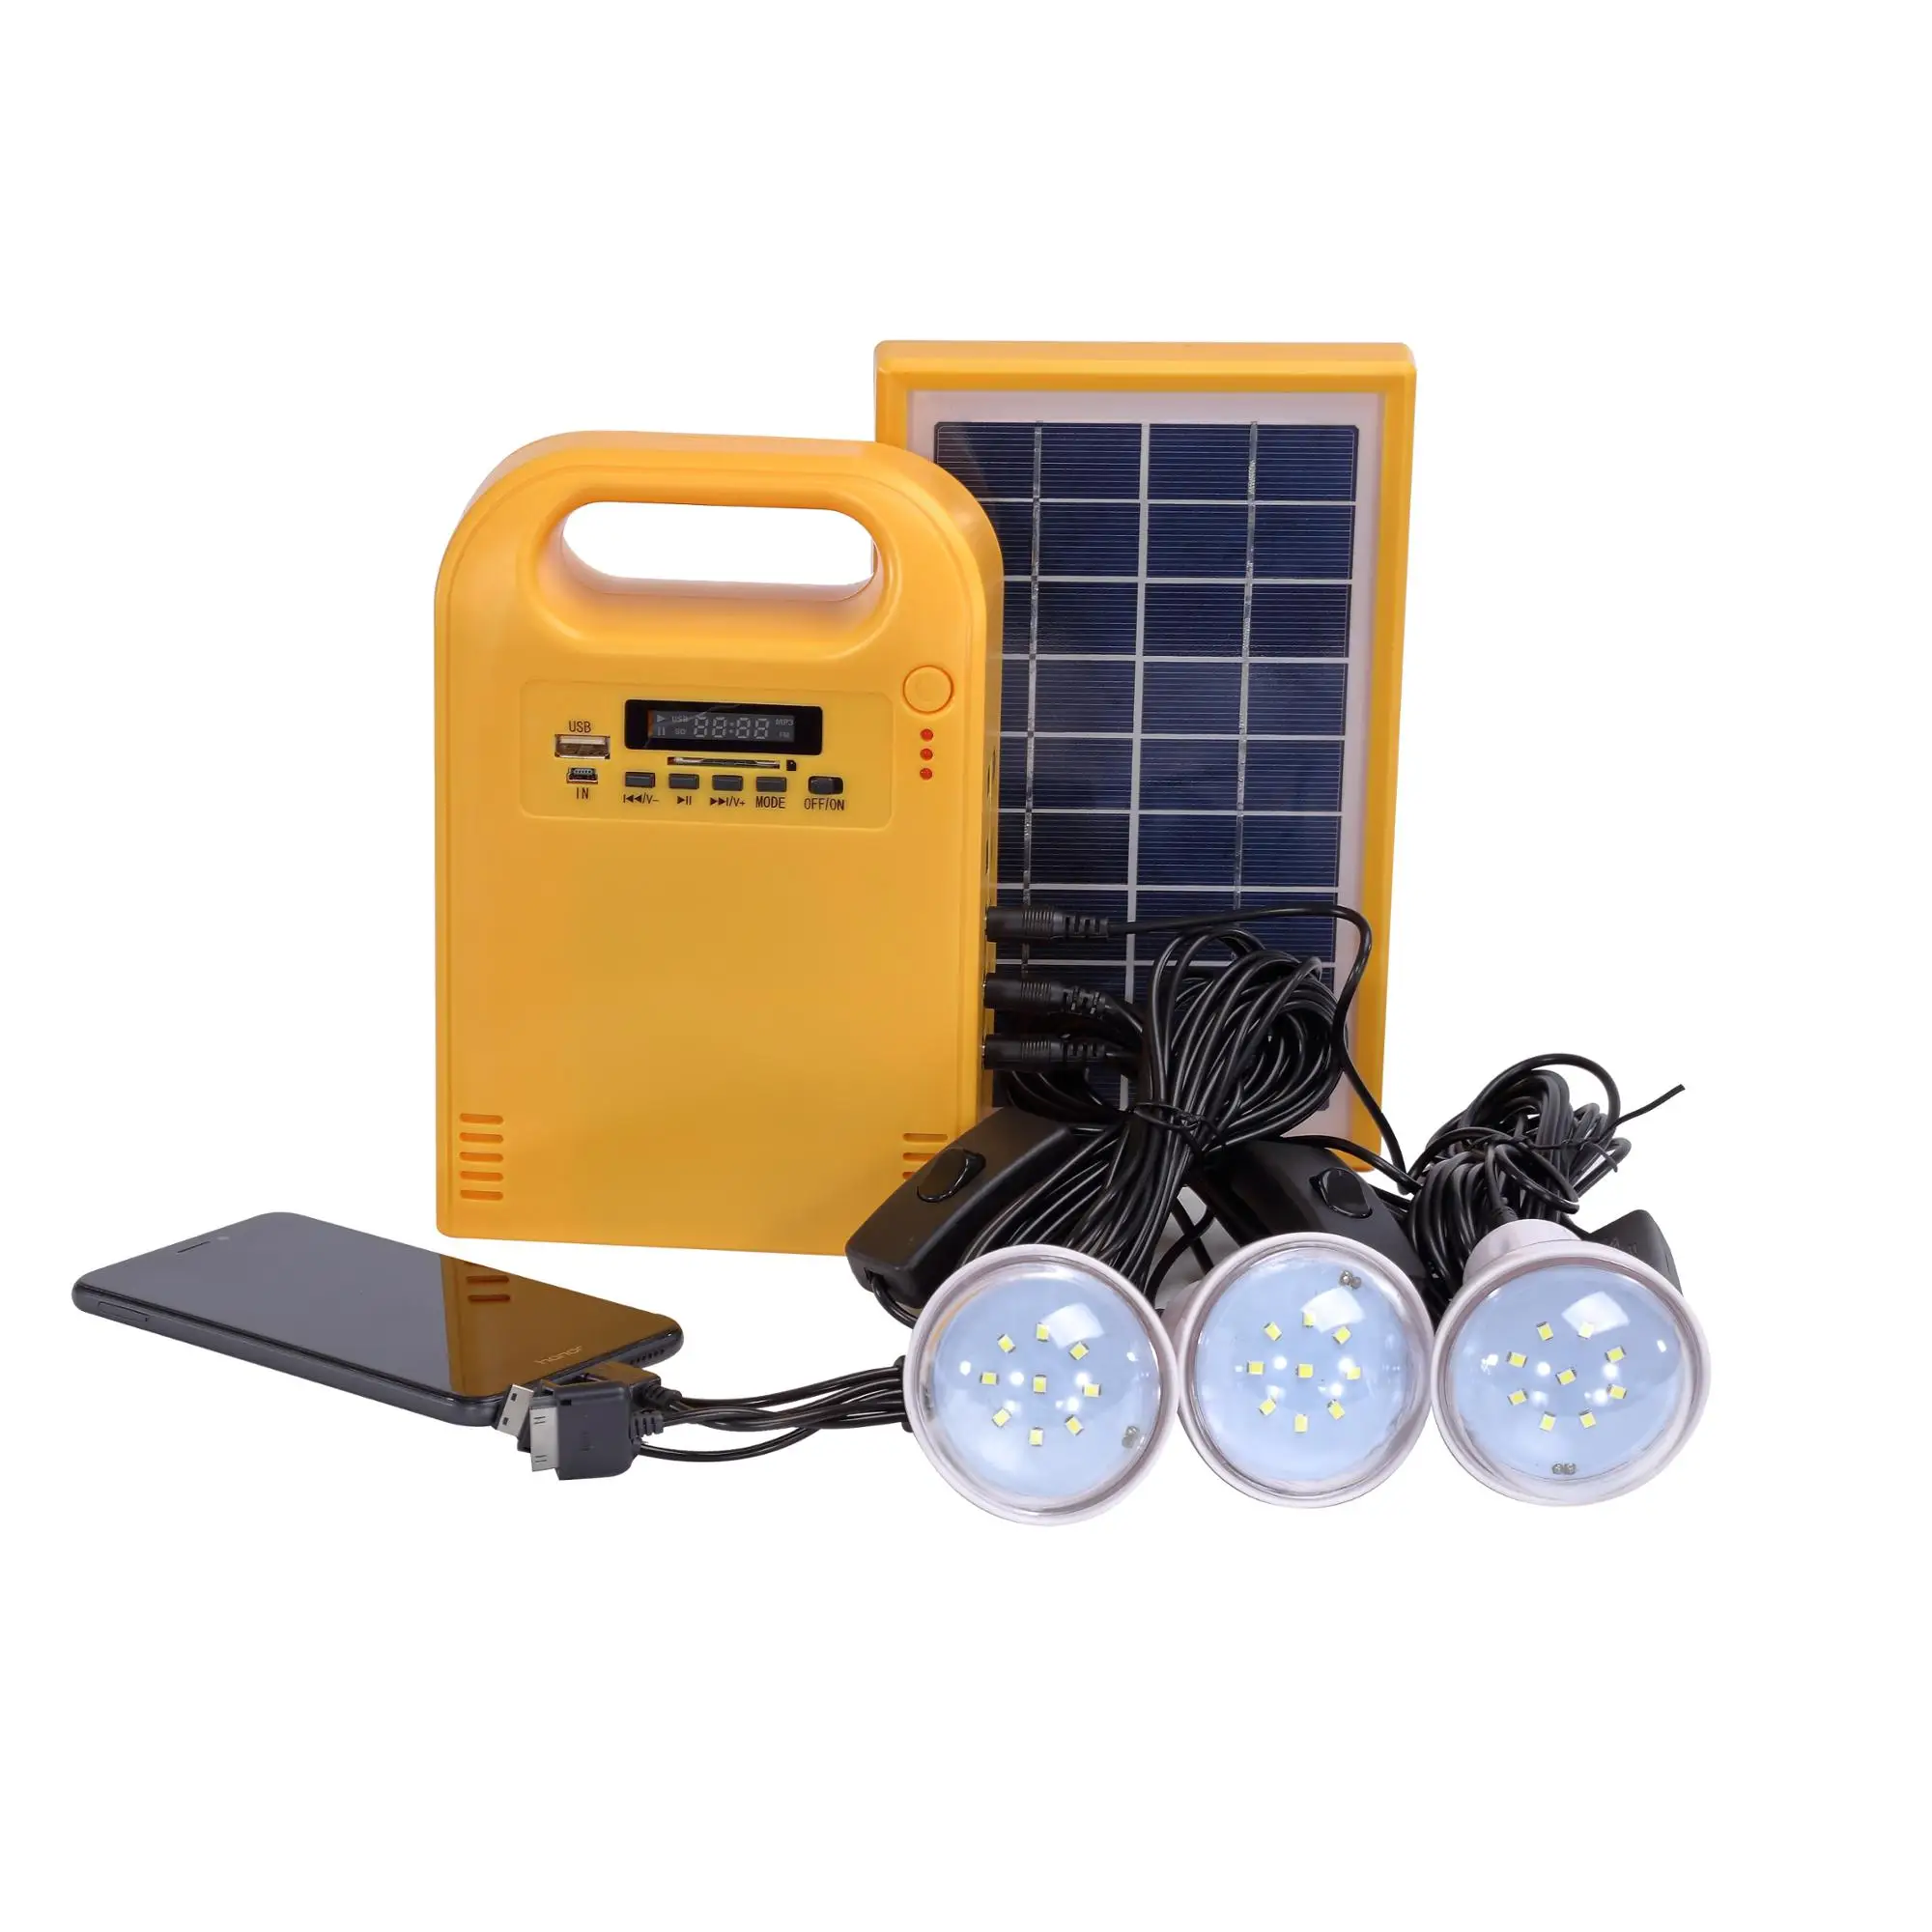 Off grid sun energy panel small home lighting solar power kit